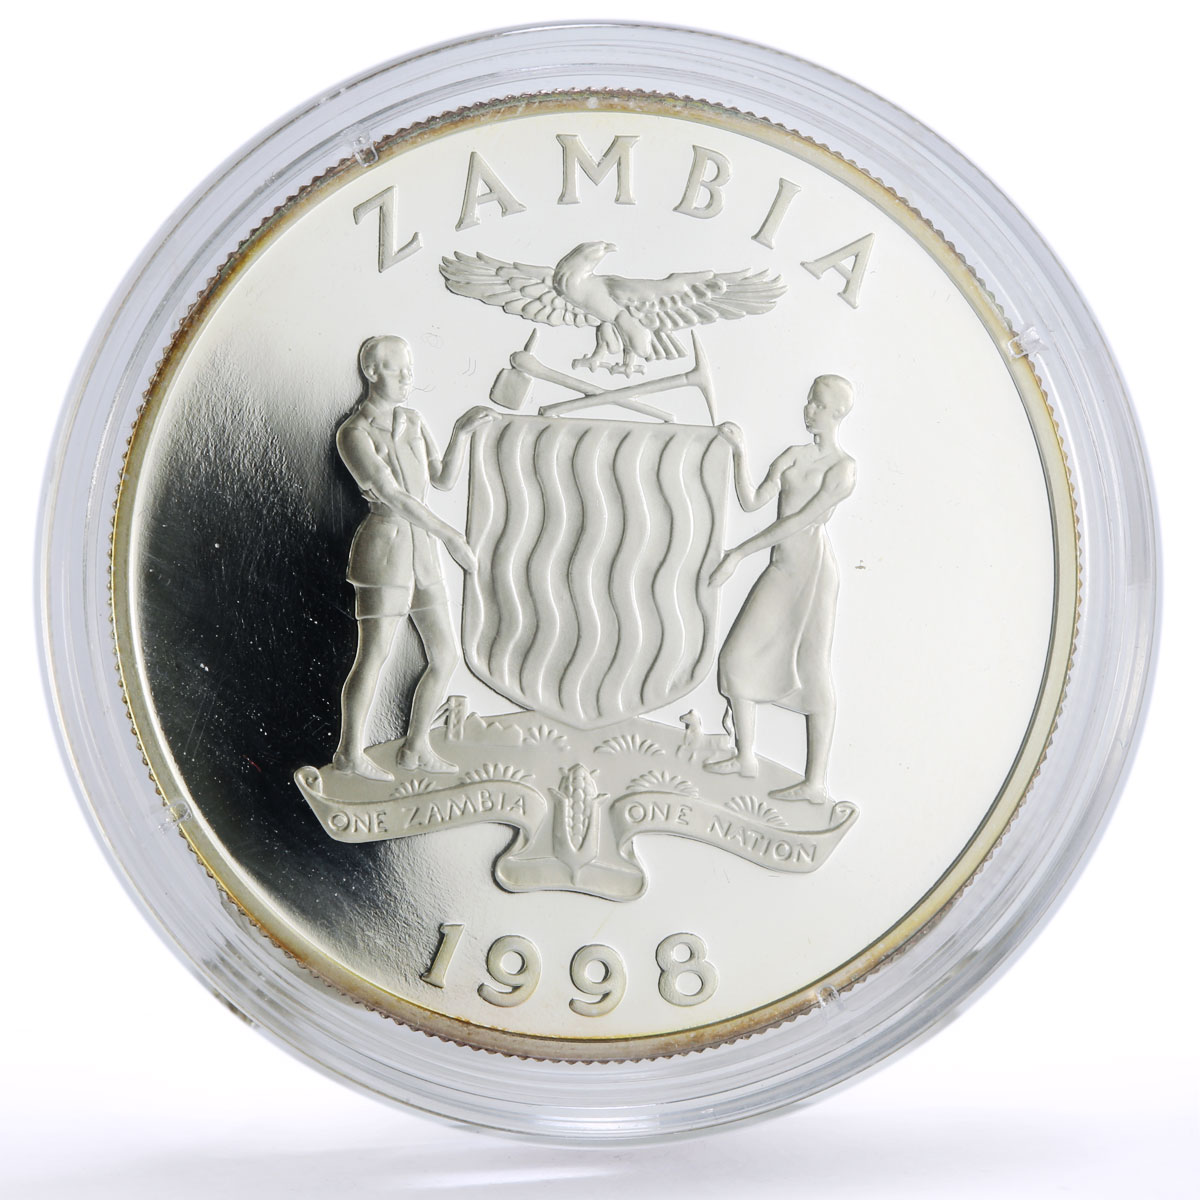 Zambia 100 kwacha Conservation Wildlife Stork Bird Fauna proof silver coin 1998